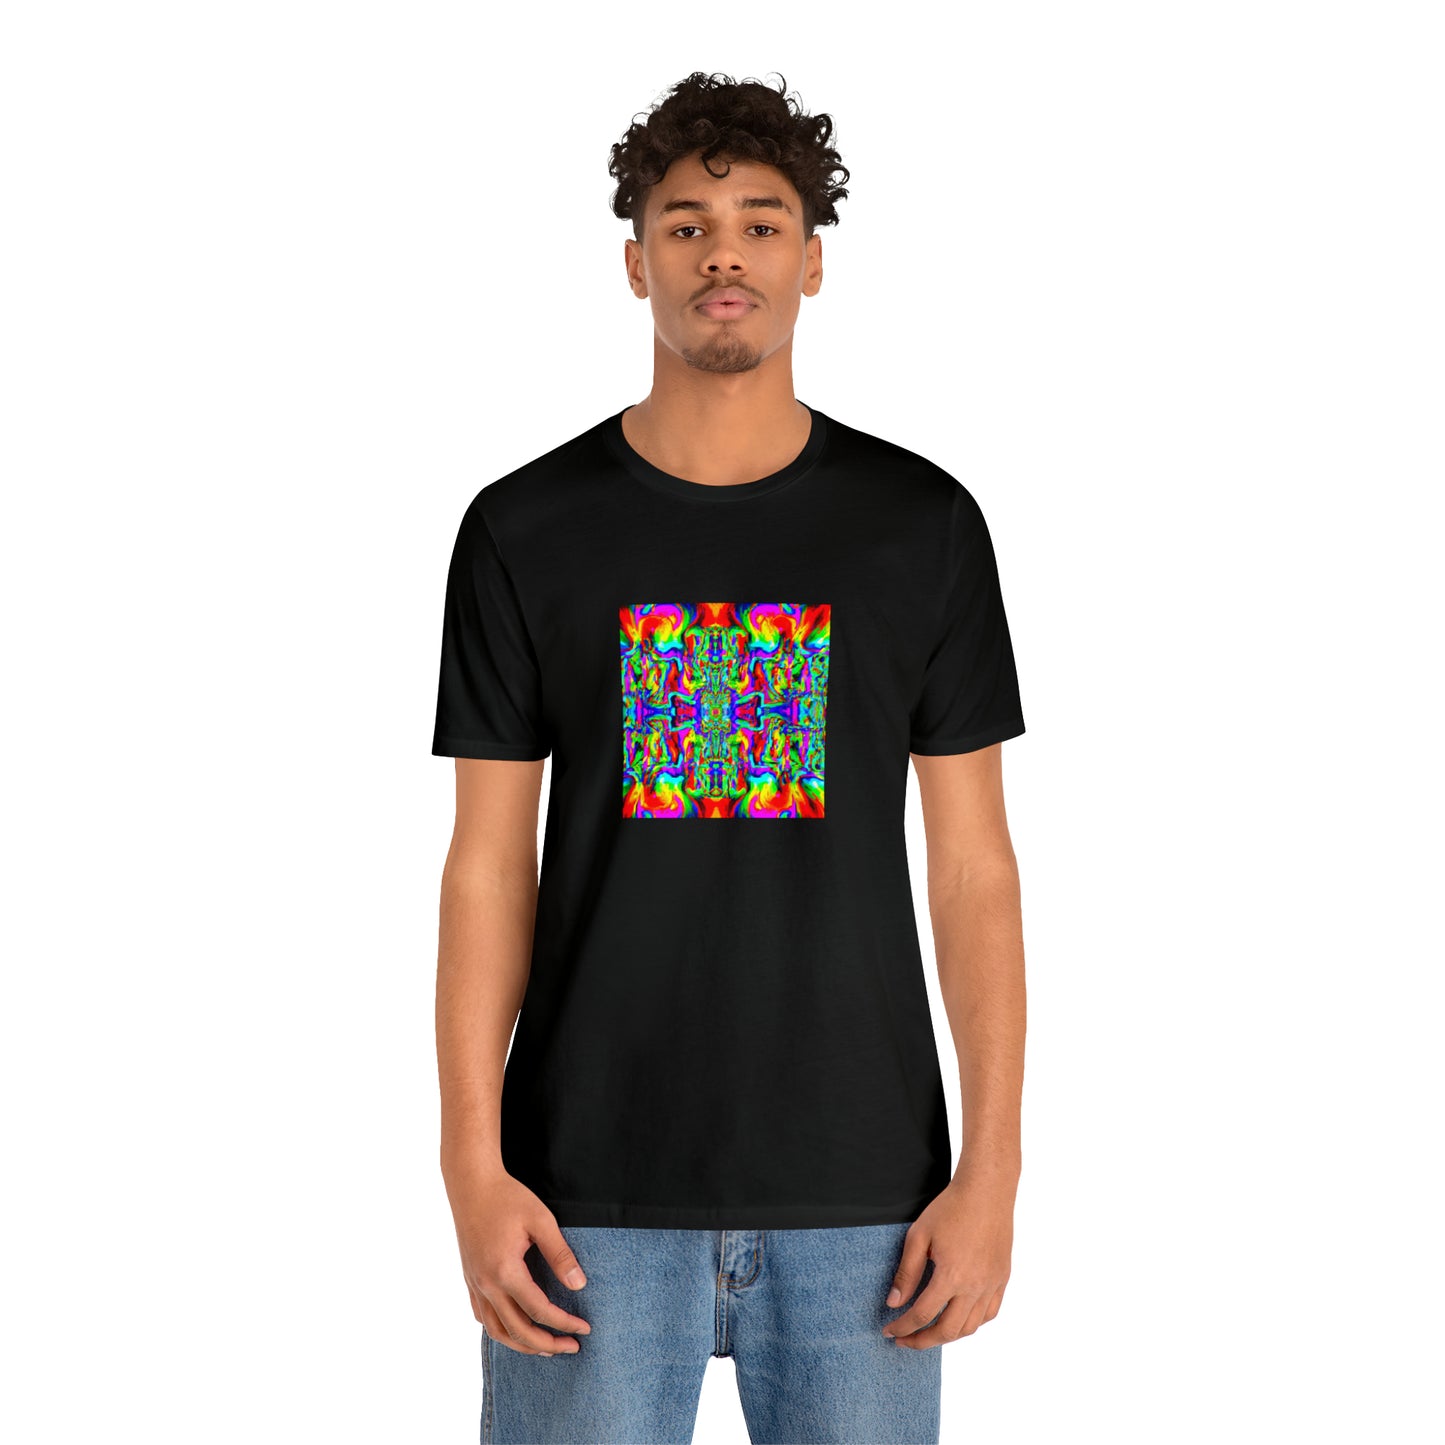 Donaldo Billingsford - - Psychedelic Trippy Pattern Tee Shirt